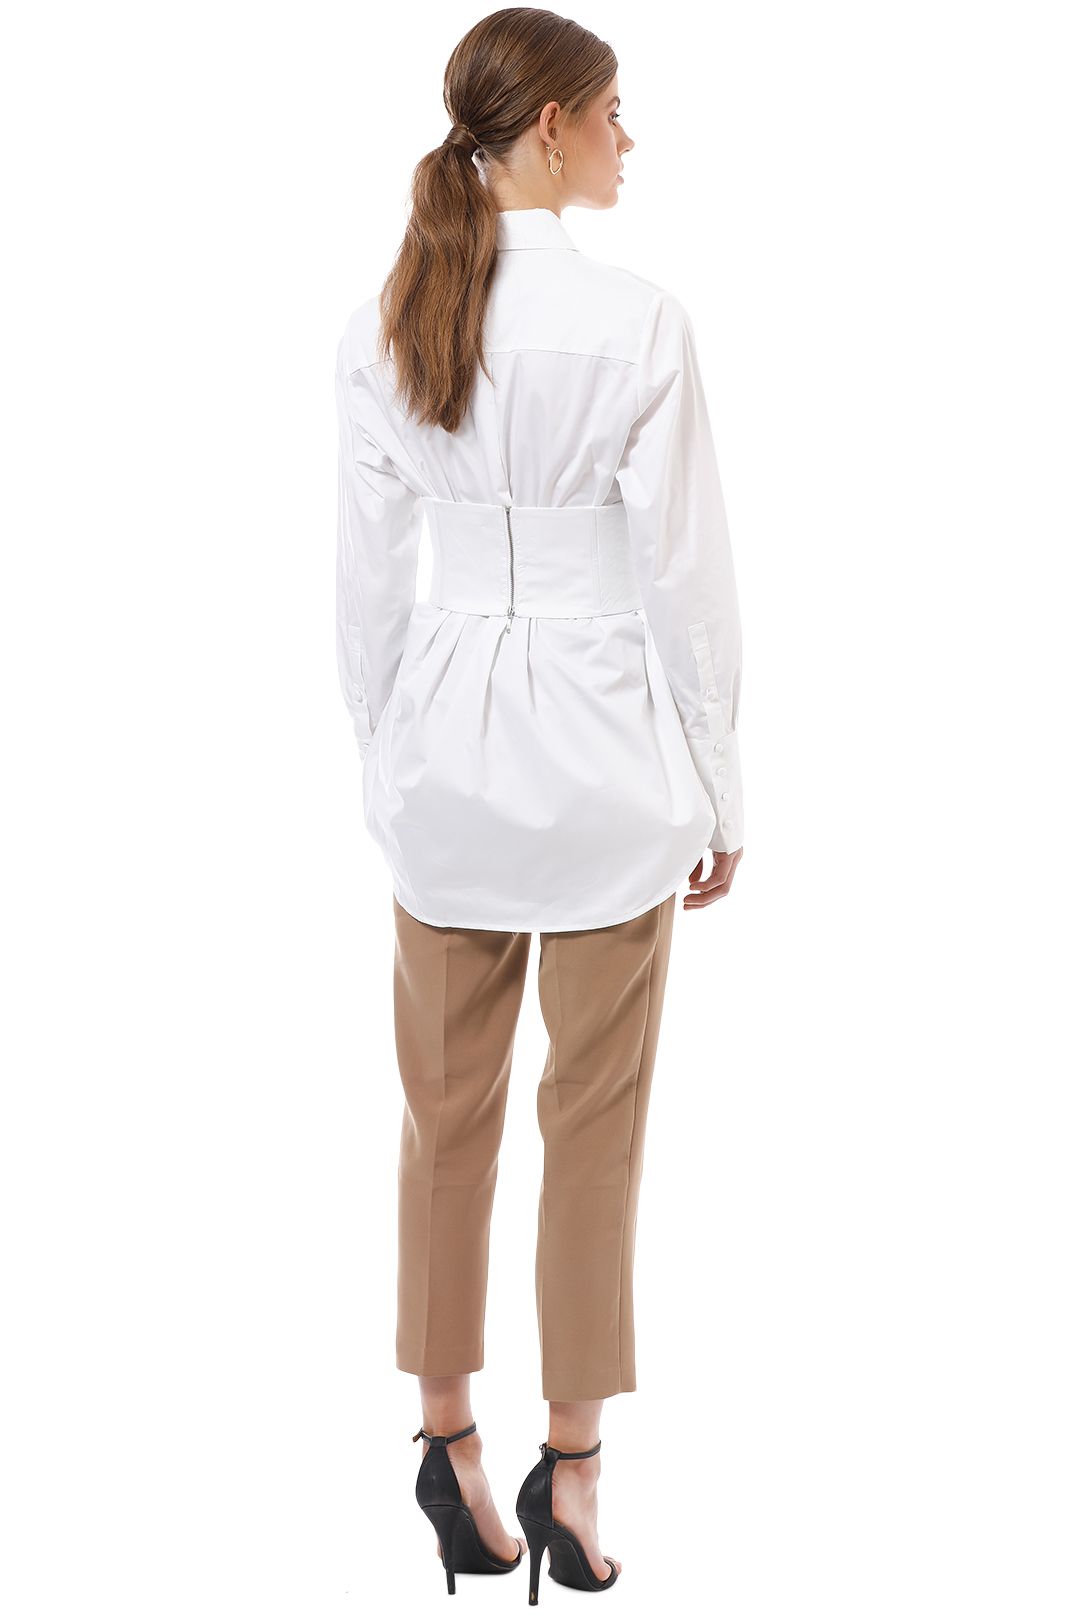 Nicholas - Cotton Corset Belted Shirt - White - Back